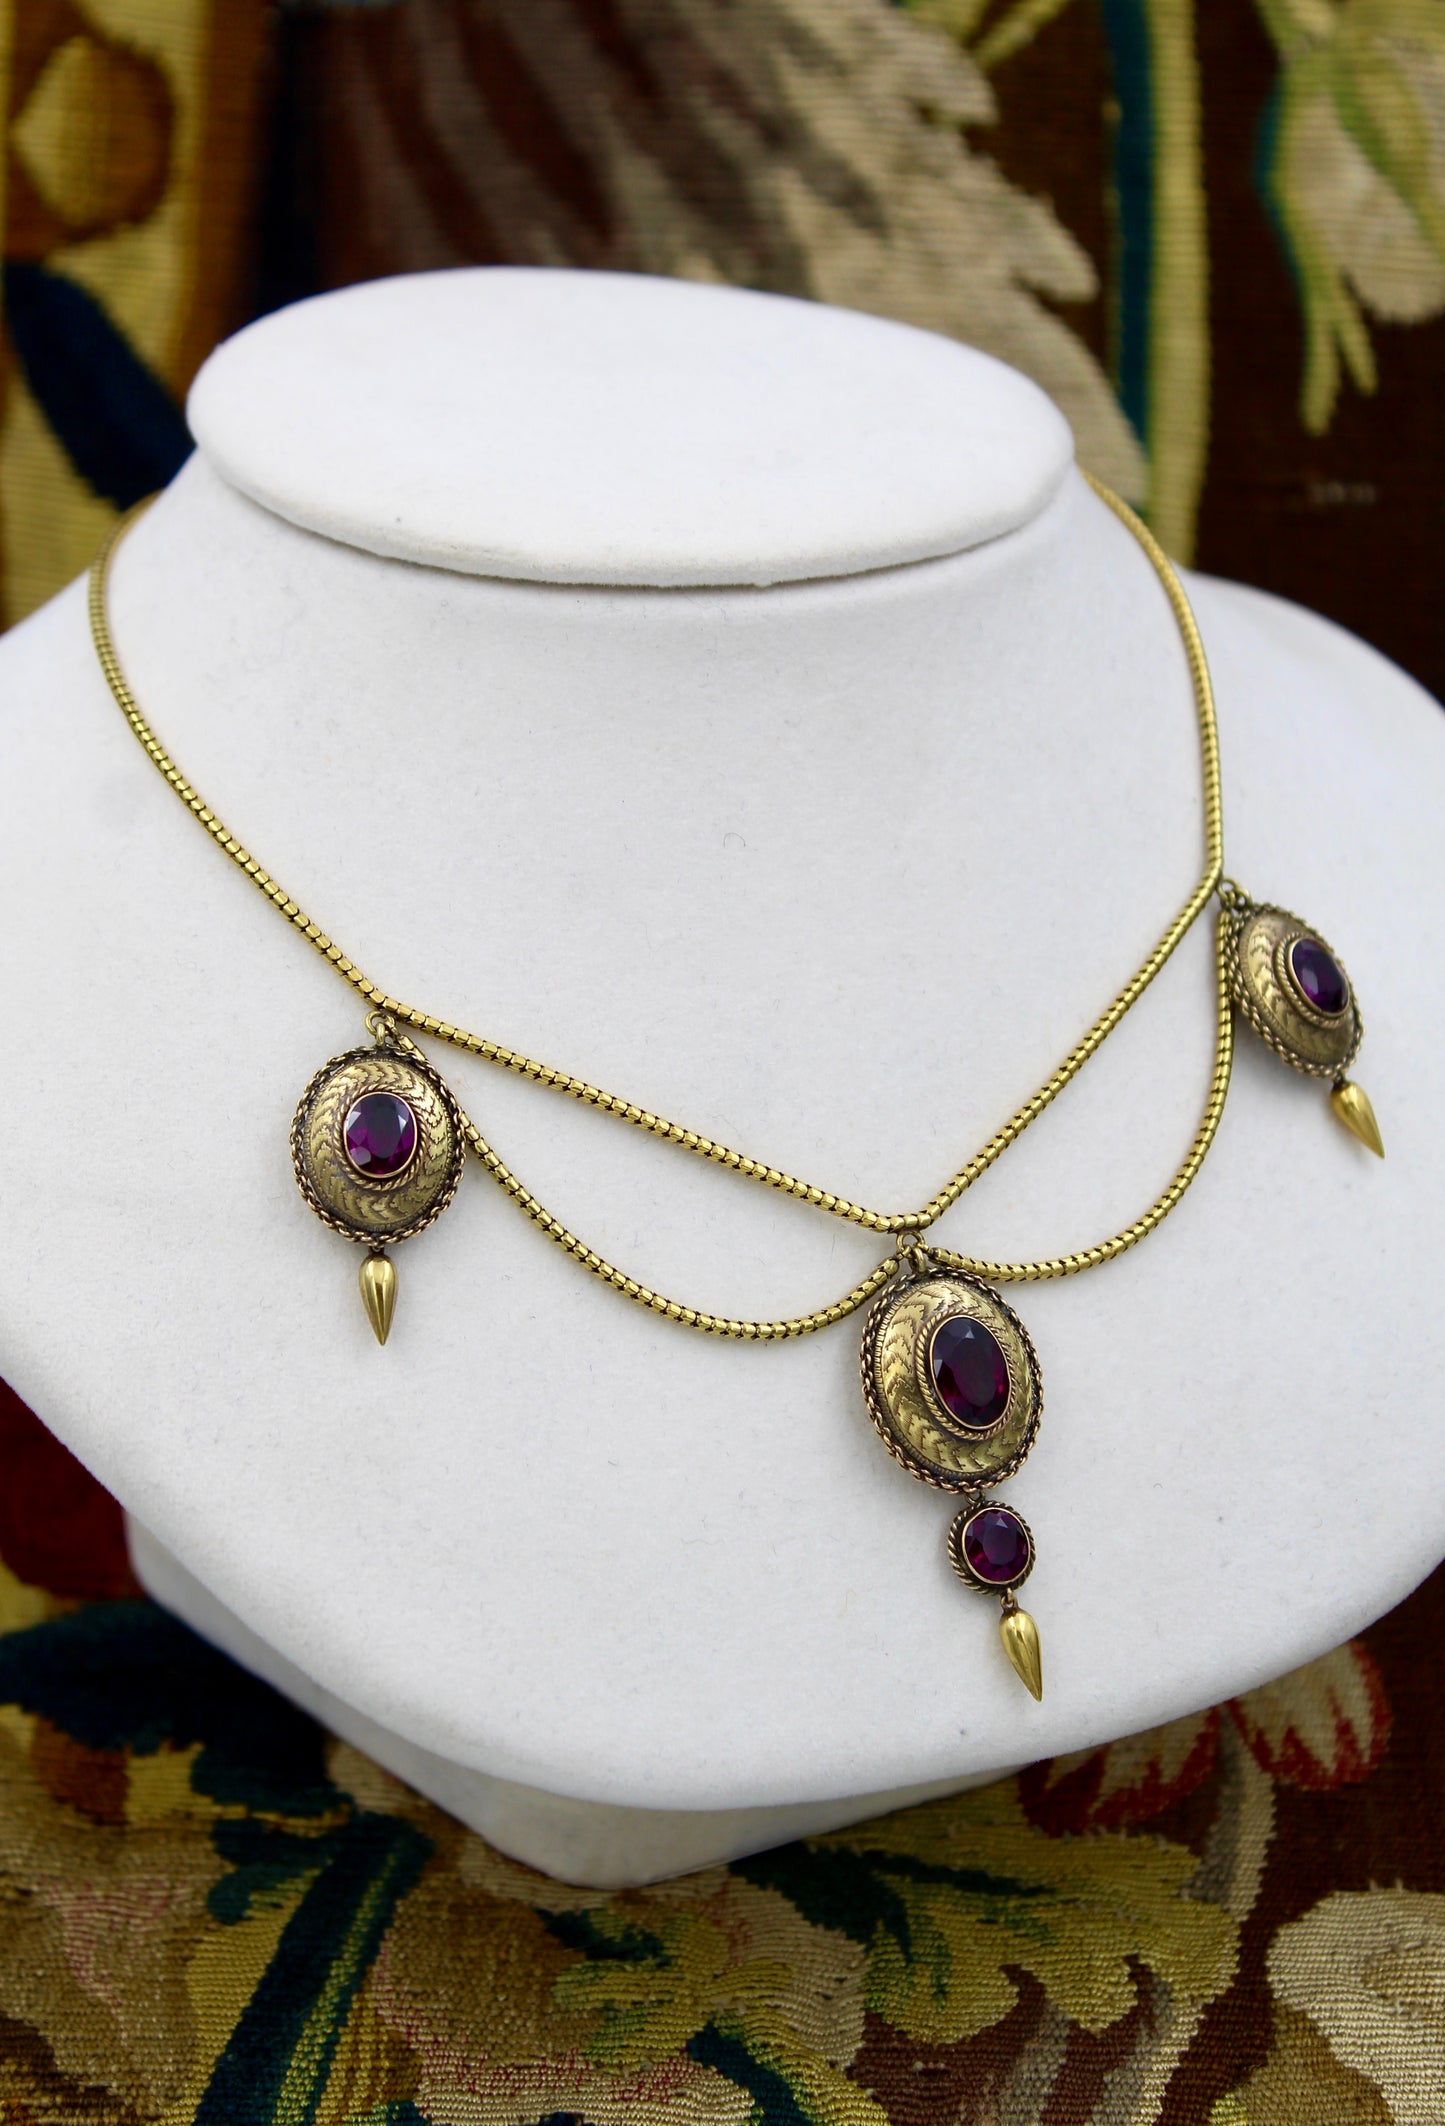 A very fine 15 carat (tested) Almandine Garnet Triple Pendant Necklace. Circa 25 February 1860 - Robin Haydock Antiques